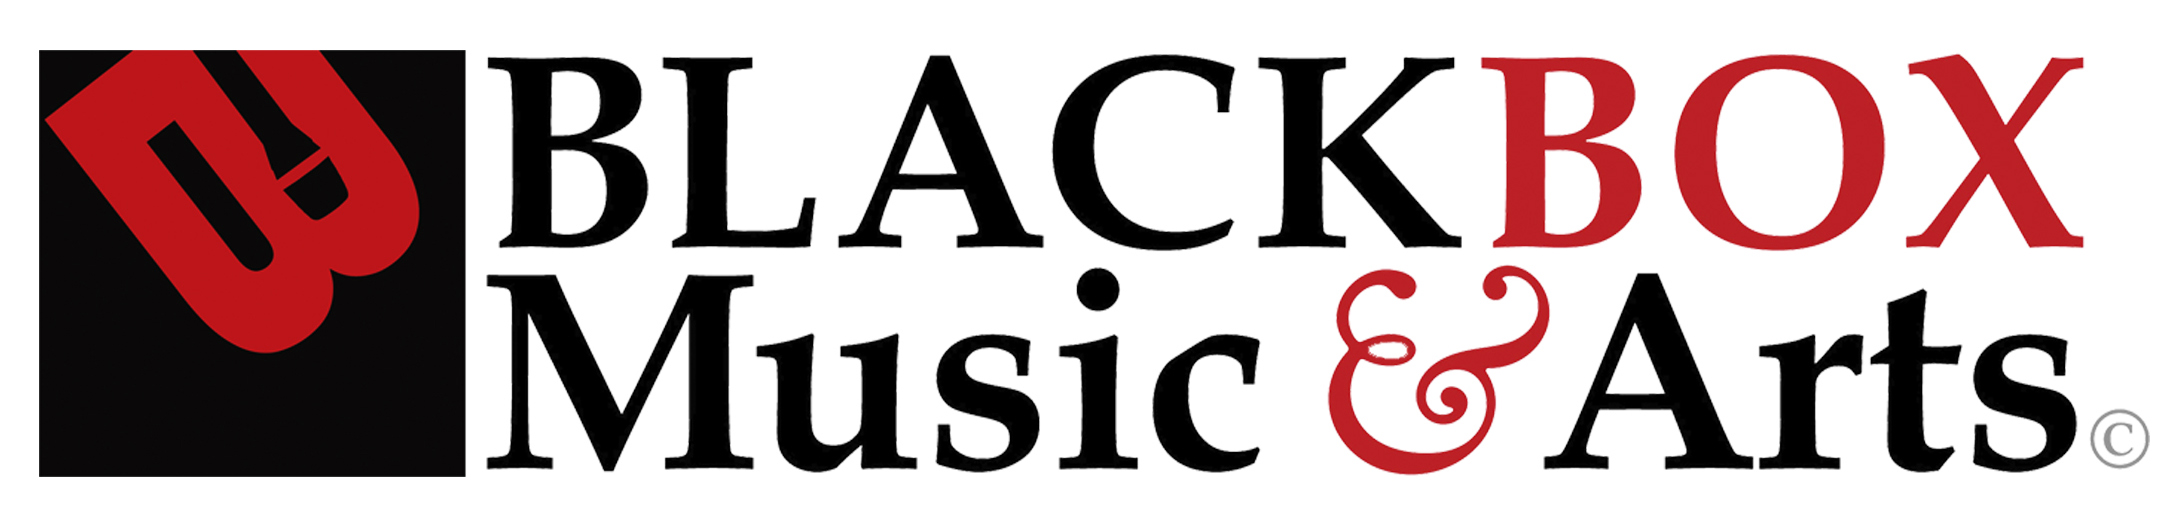 BlackBox Music & Arts Logo